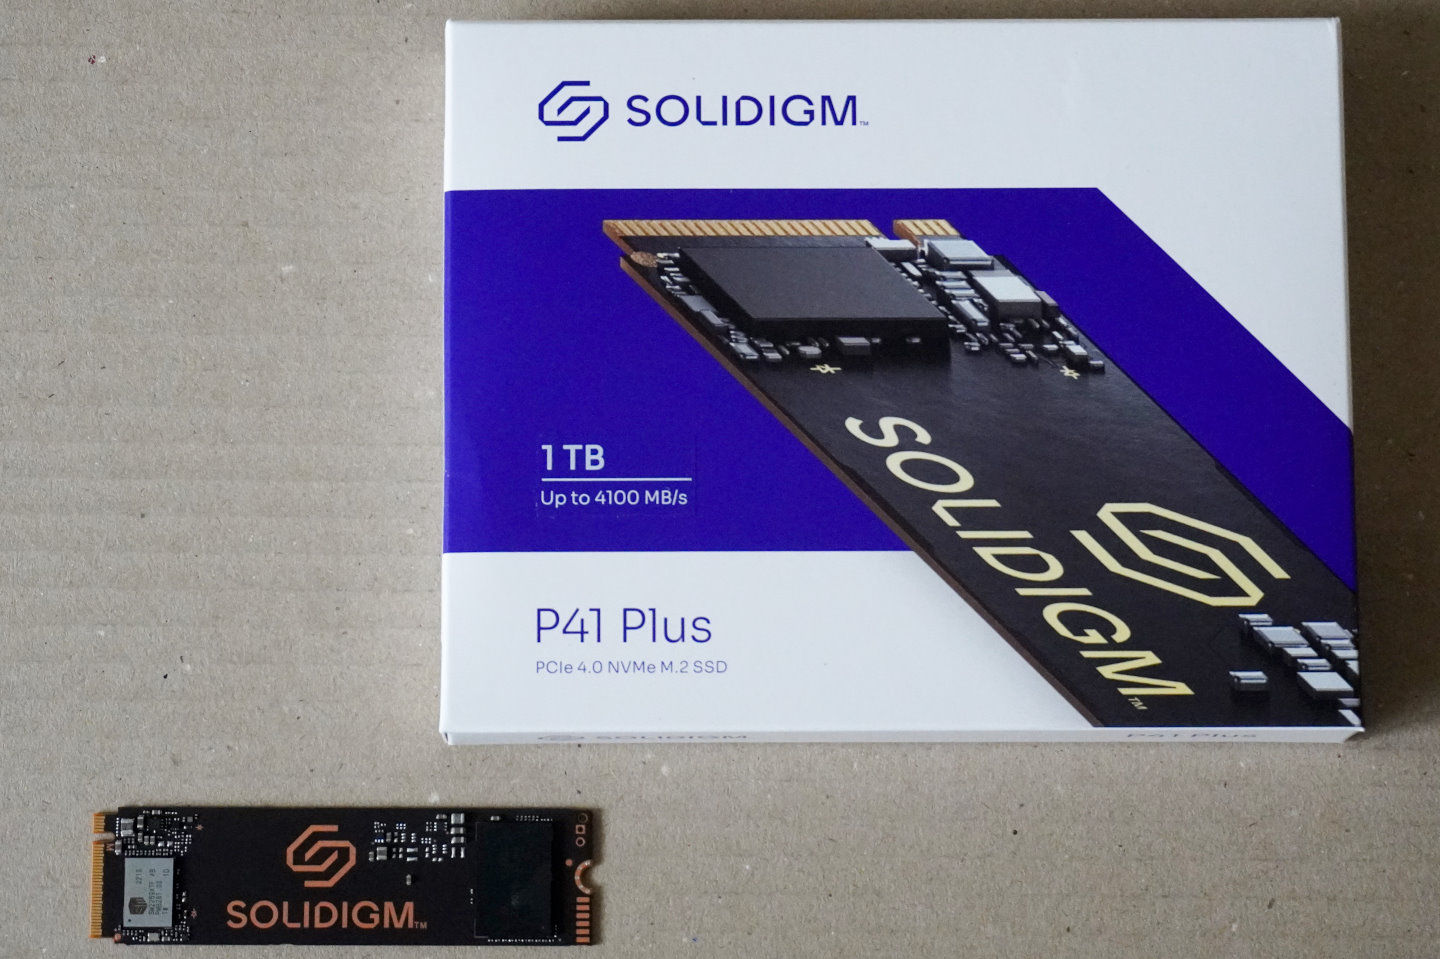 Solidigm推出的P41 Plus系列固態硬碟具有多種尺寸、容量版本，我們這次測試的是M. 2280、1TB版本。